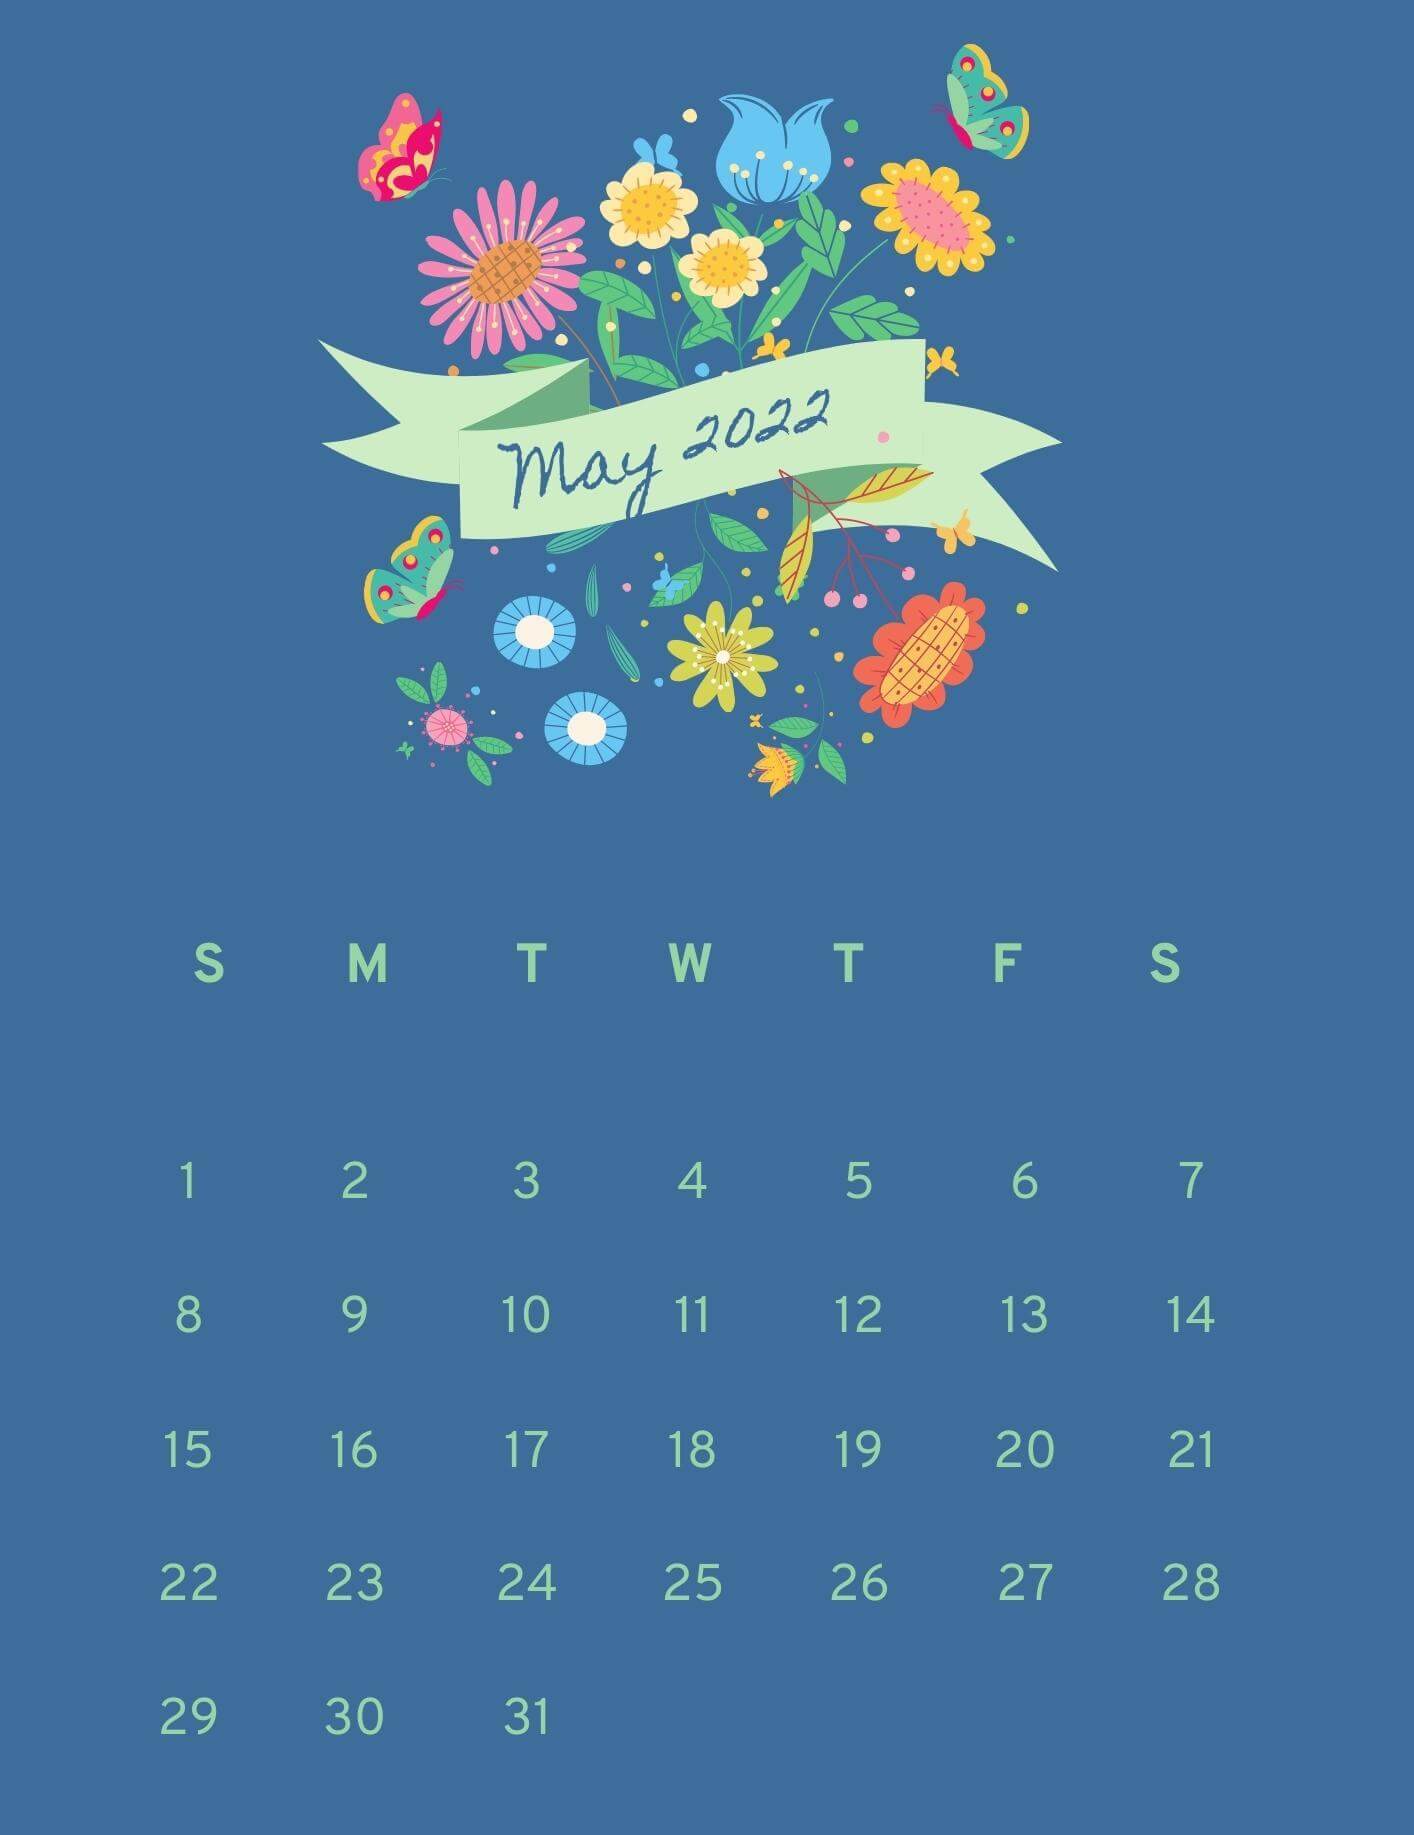 May 2022 Calendar Design